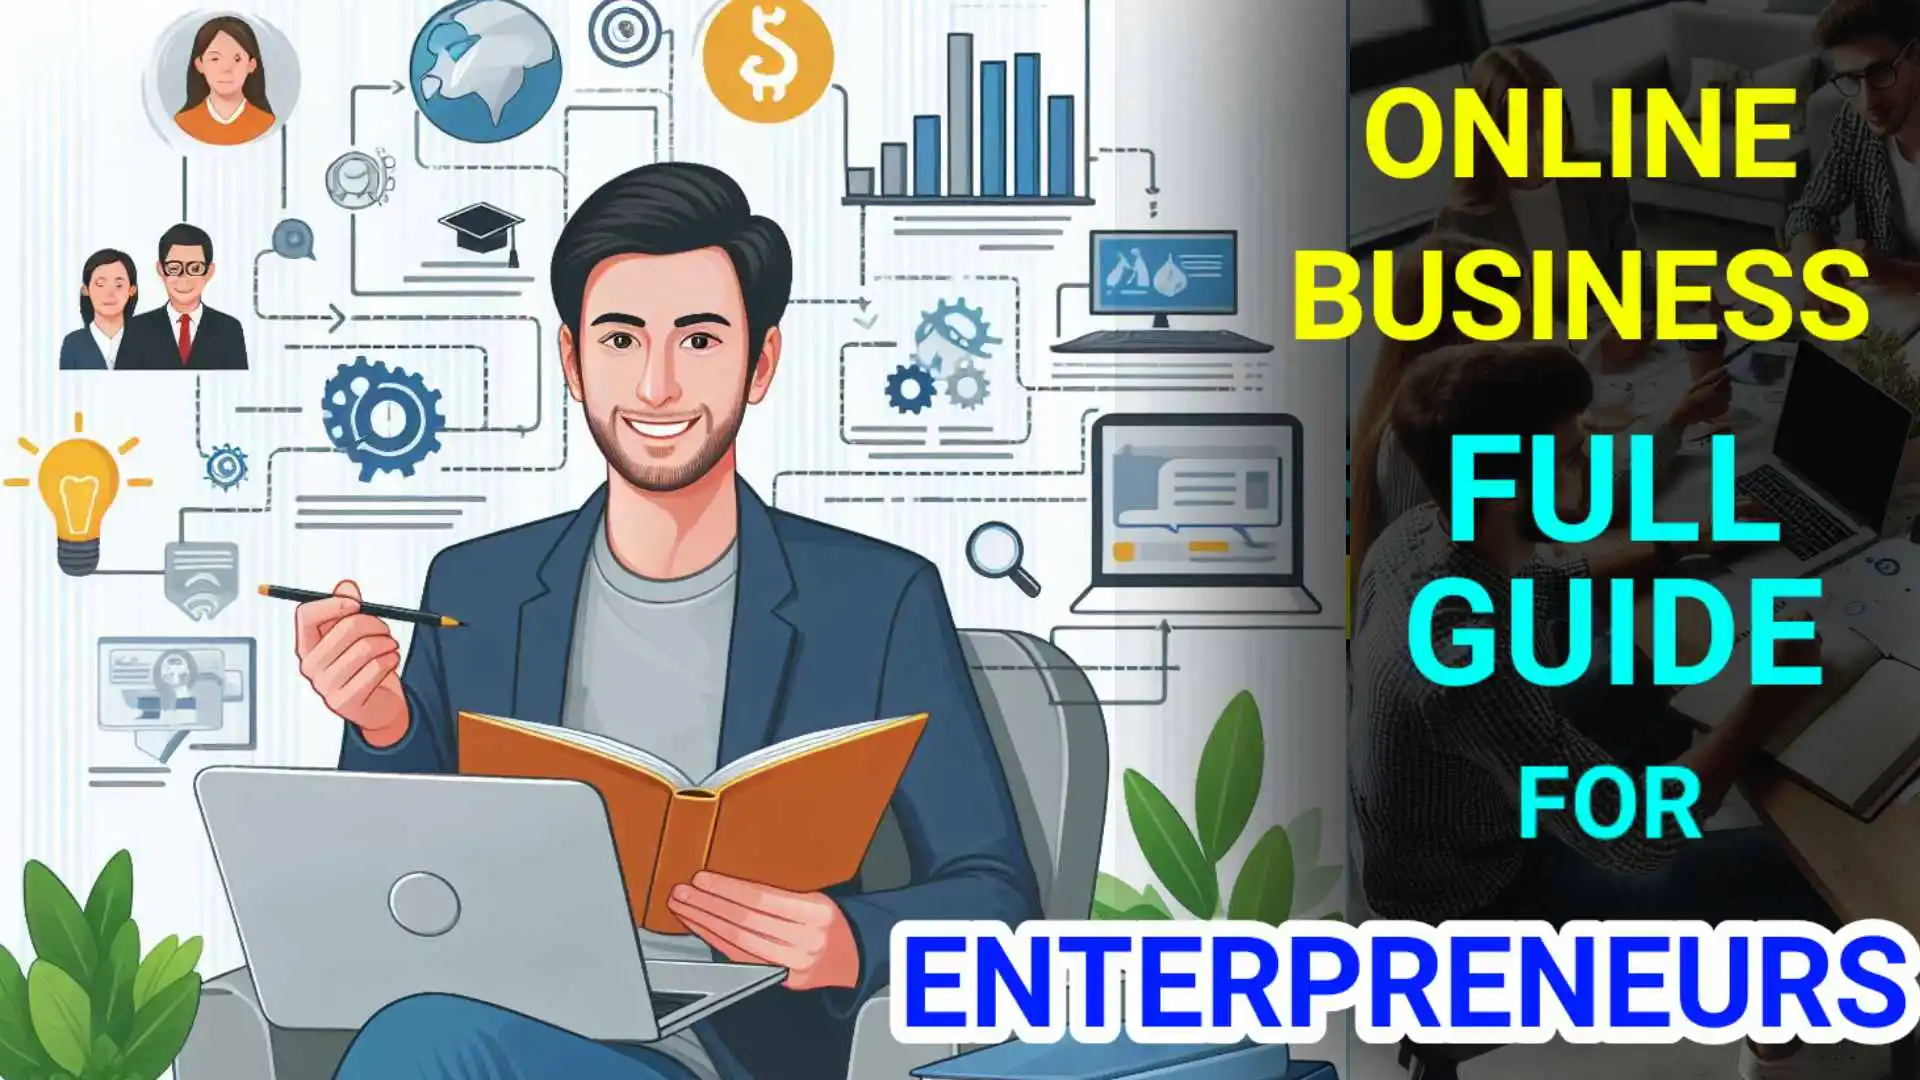 Online business courses for entrepreneurs